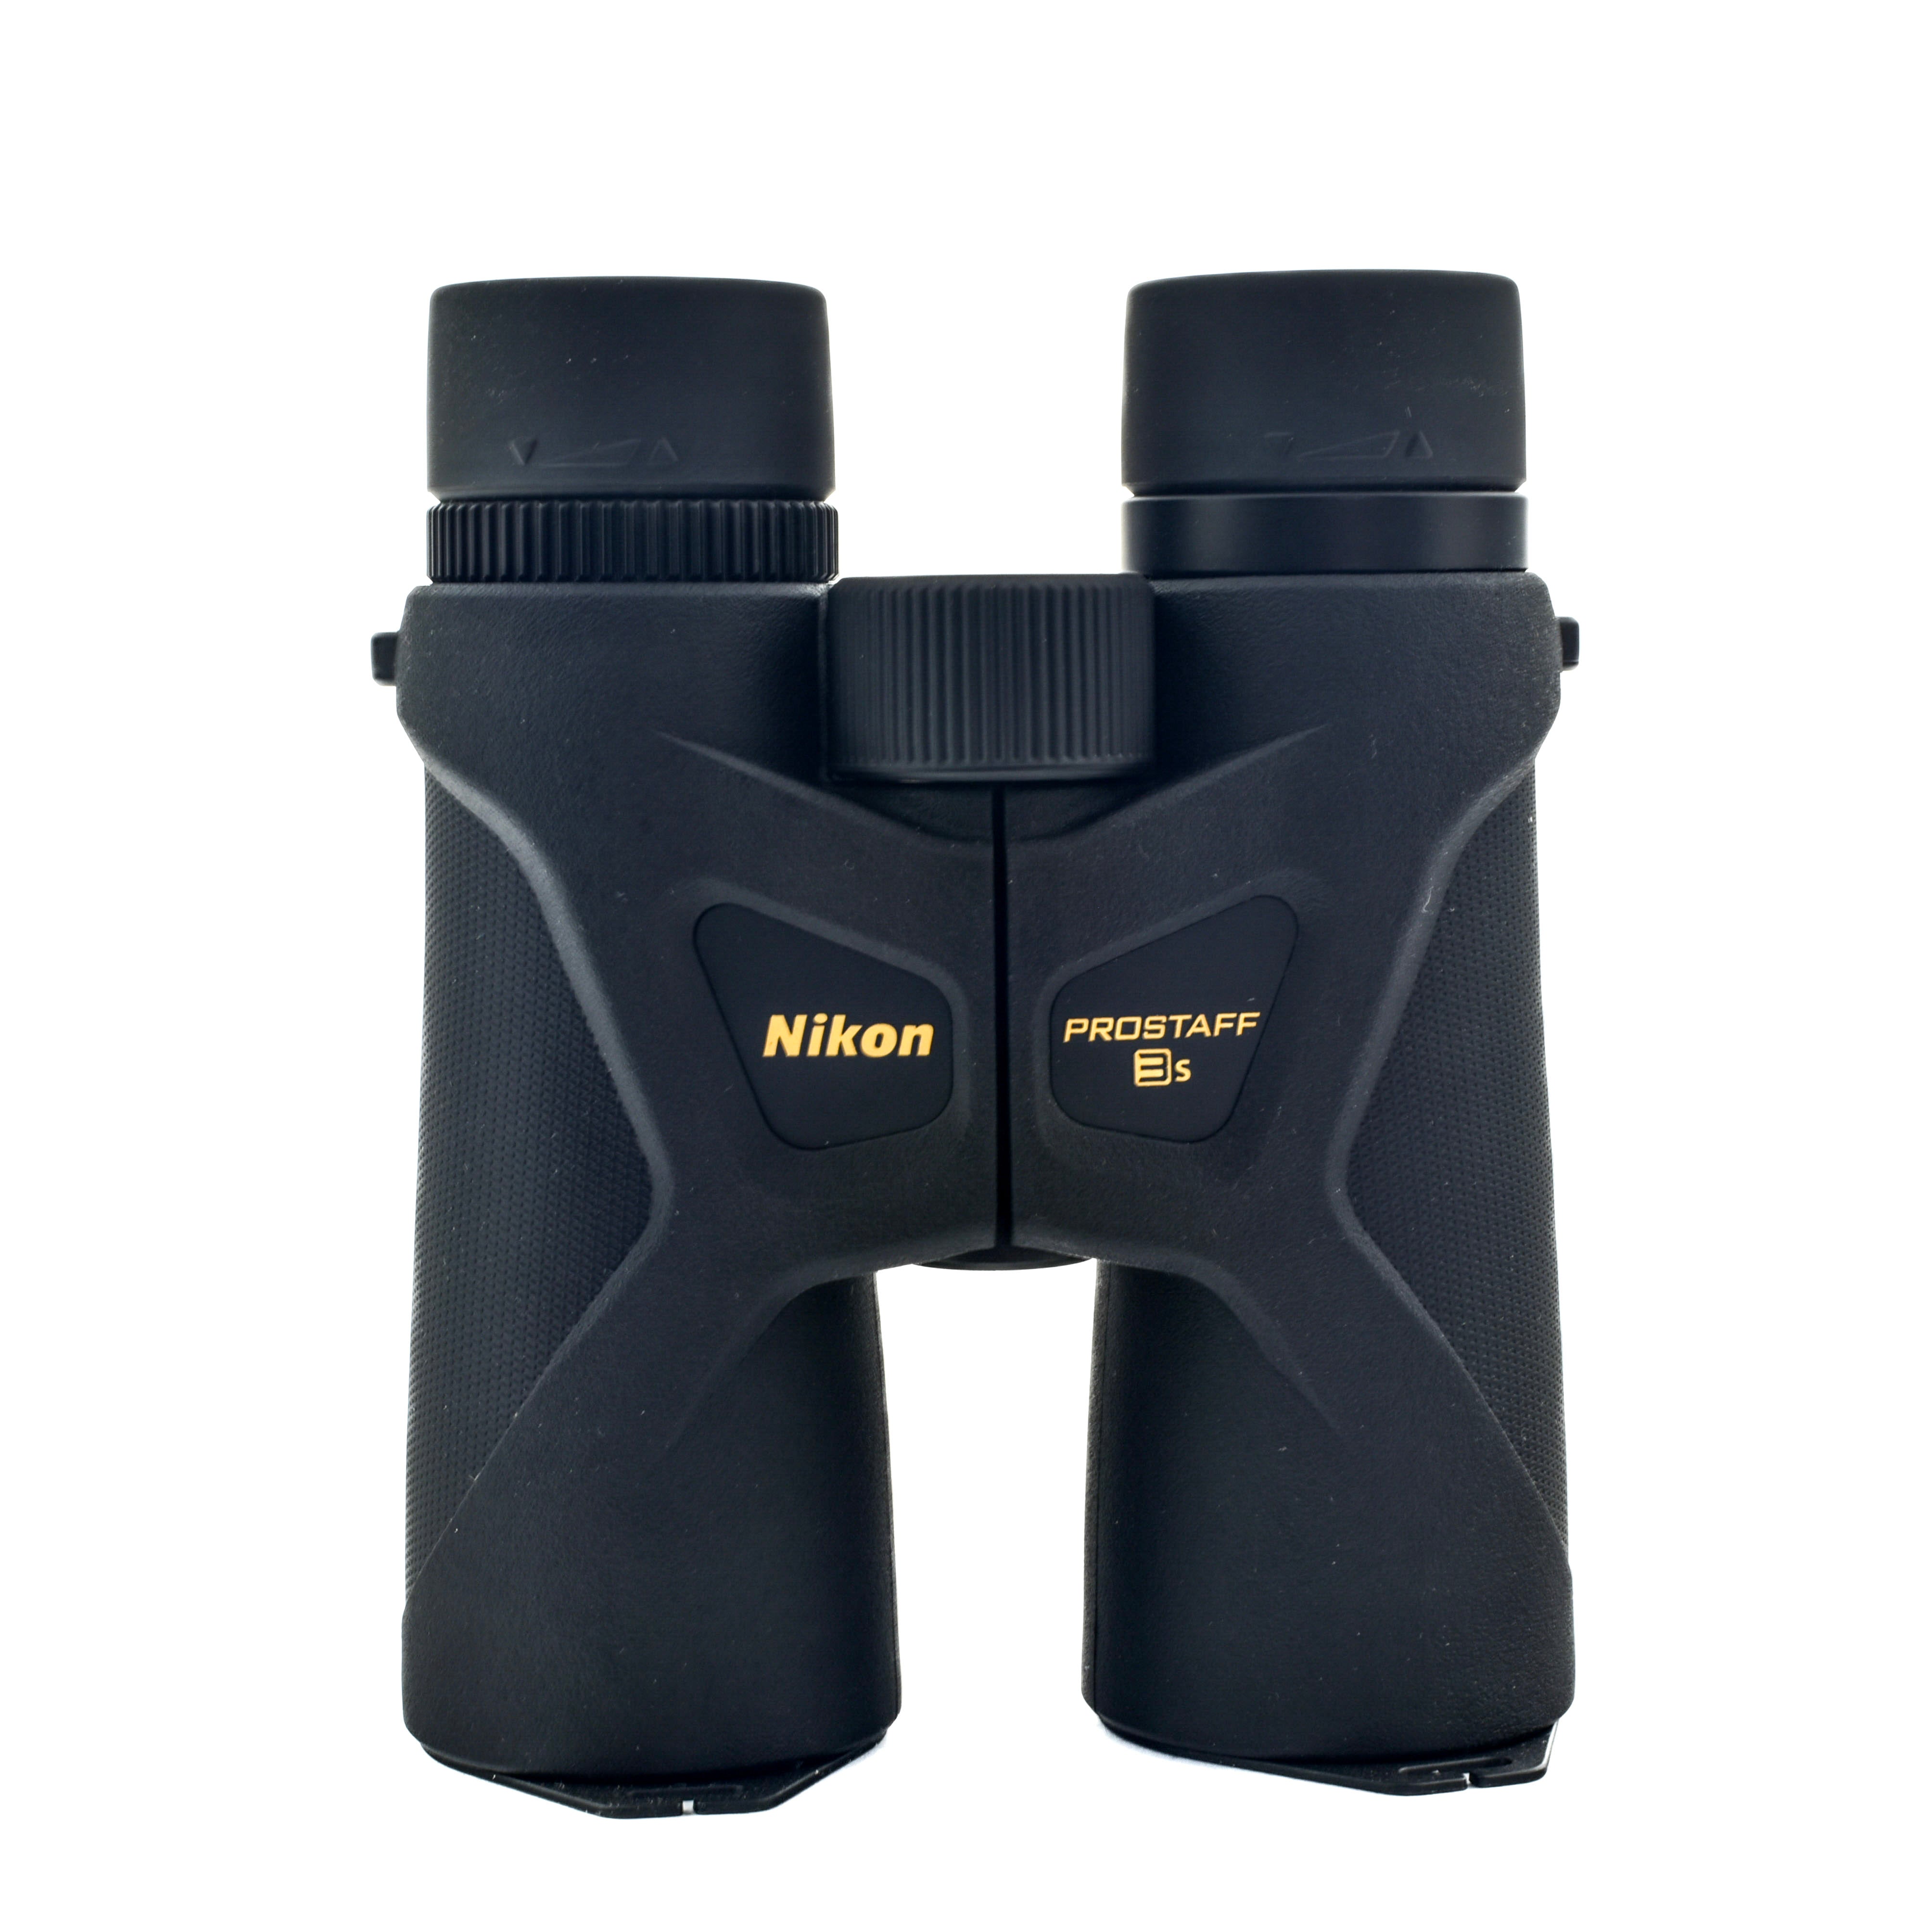 Nikon Prostaff 3s 8x42 WP Binoculars (Black)